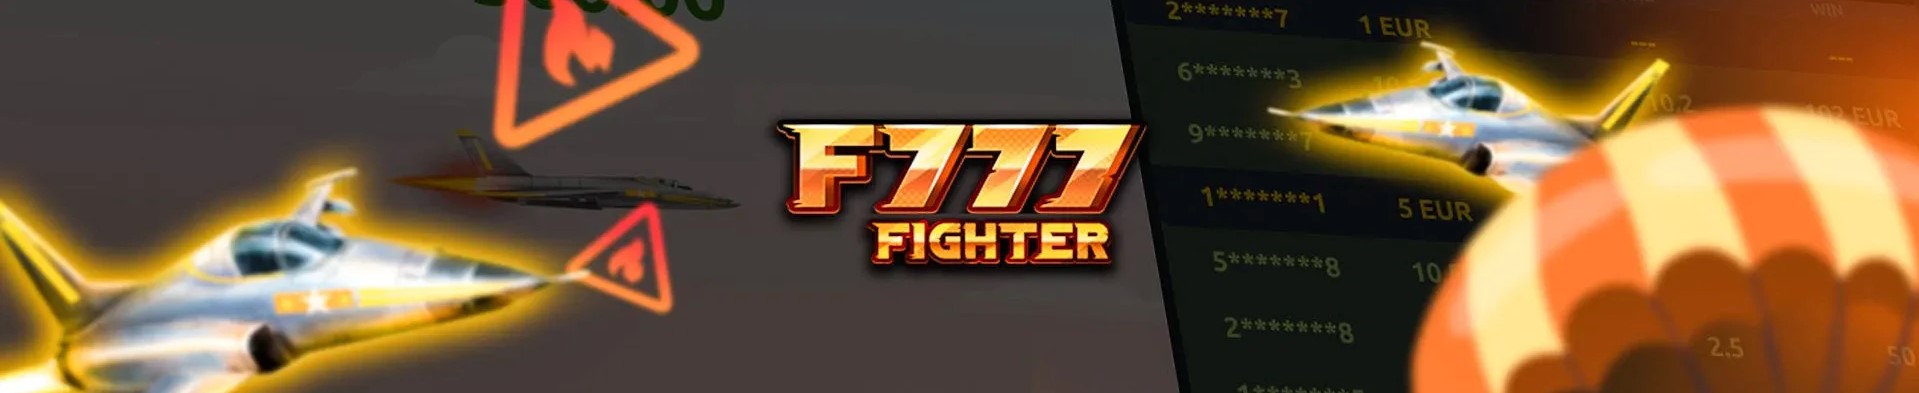 F777 fighter રમત.